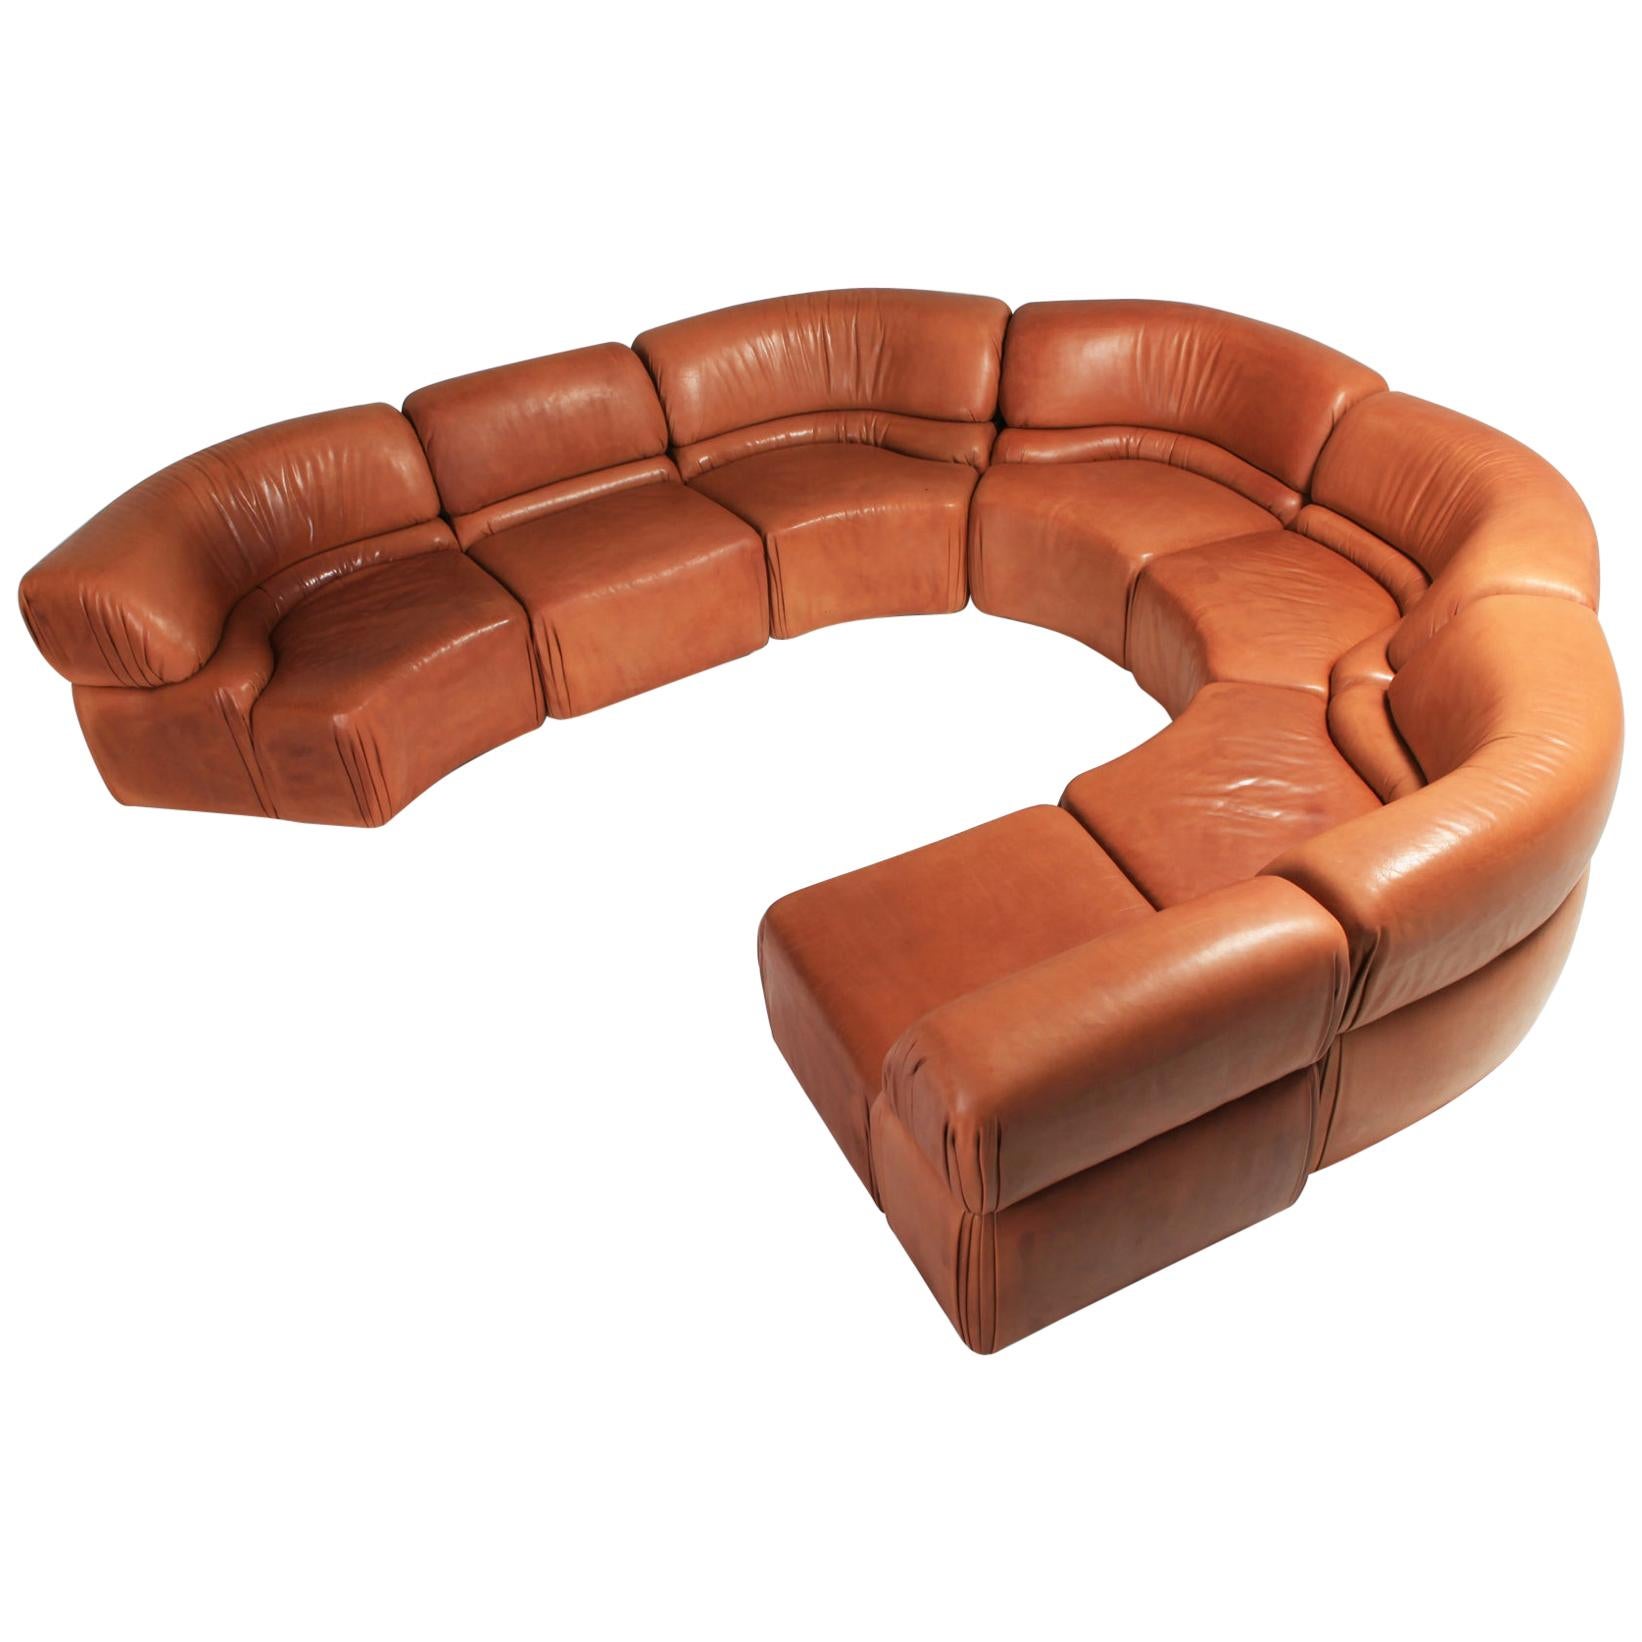 'Cosmos' Sectional Cognac Leather Sofa by De Sede, Switzerland